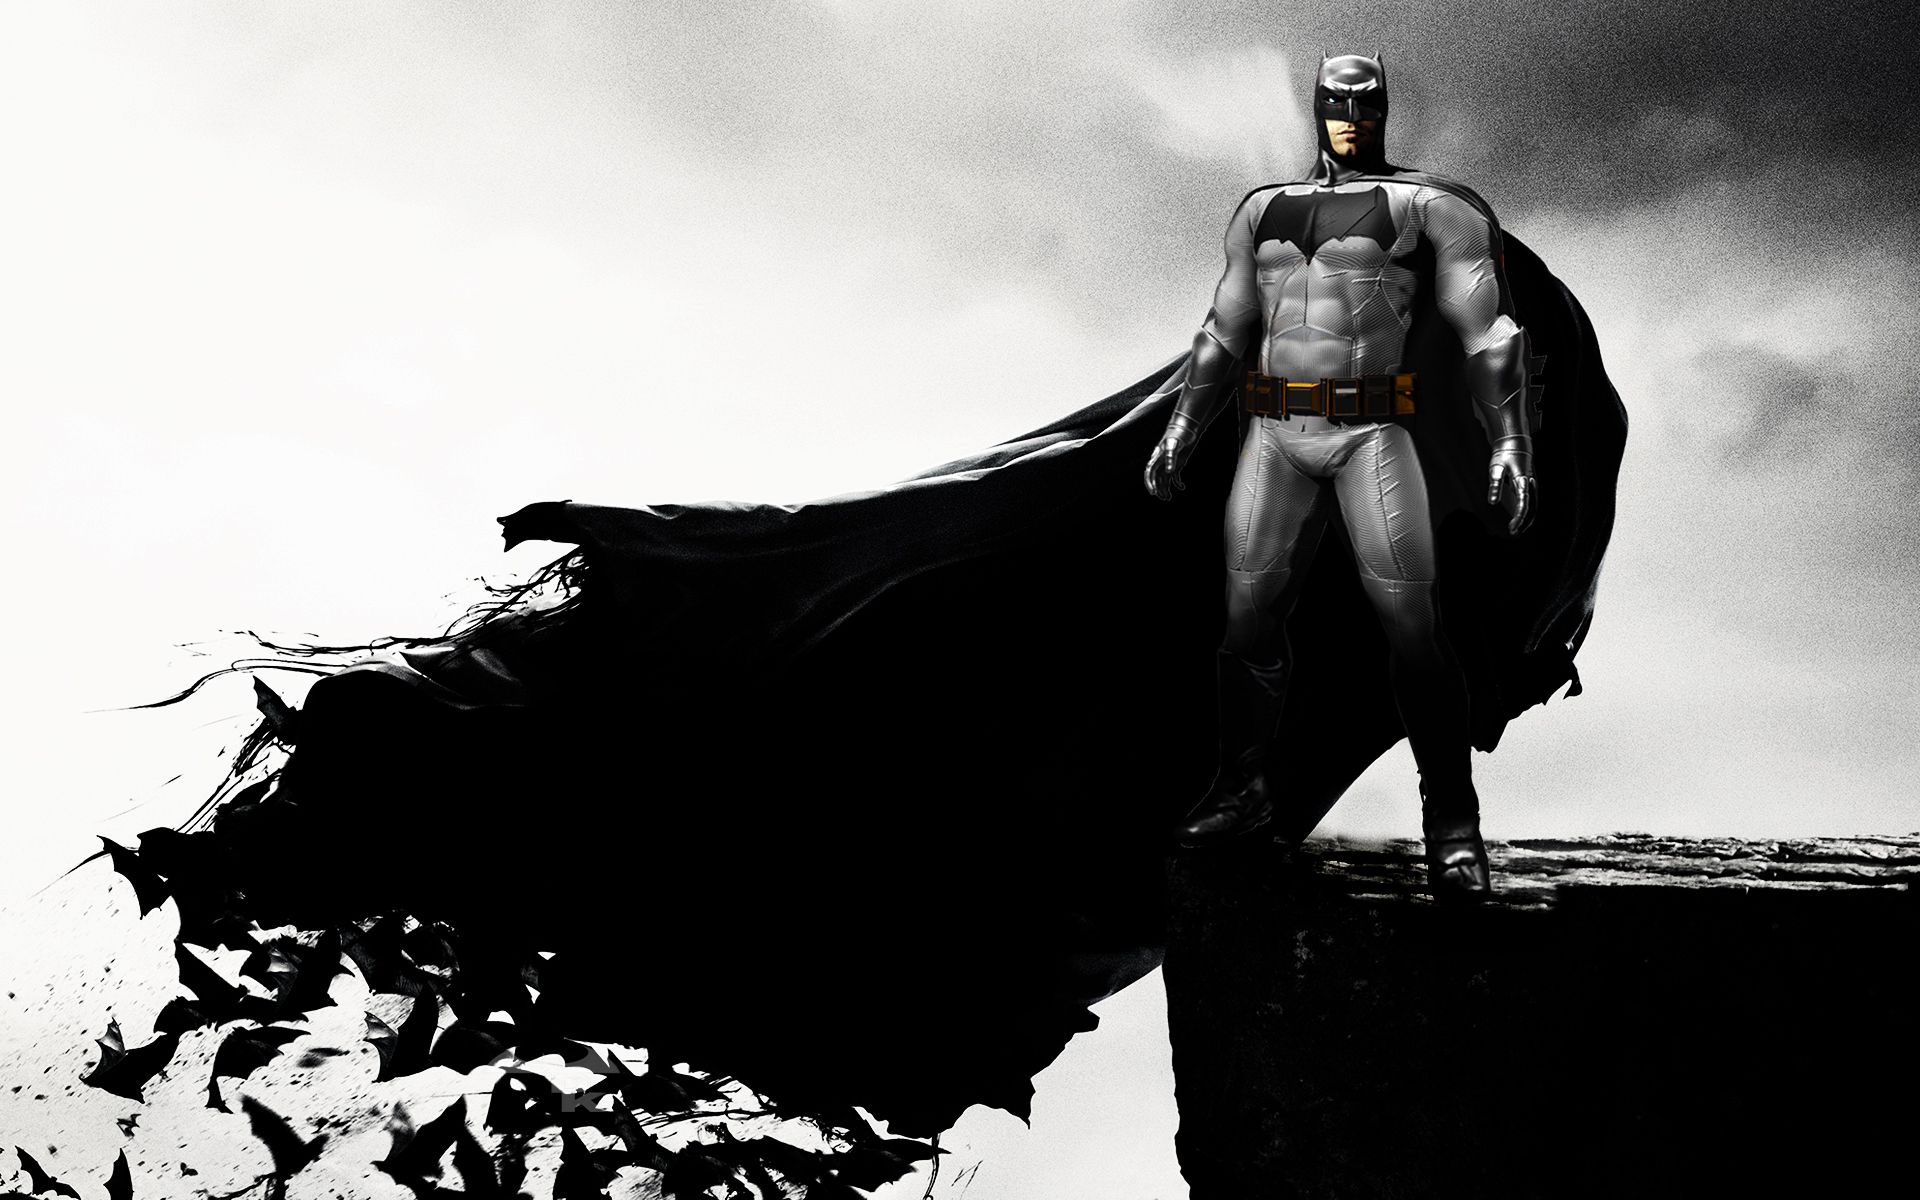 Batman The Dark Knight Fan Art 1366x768 Resolution HD 4k Wallpaper, Image, Background, Photo and Picture